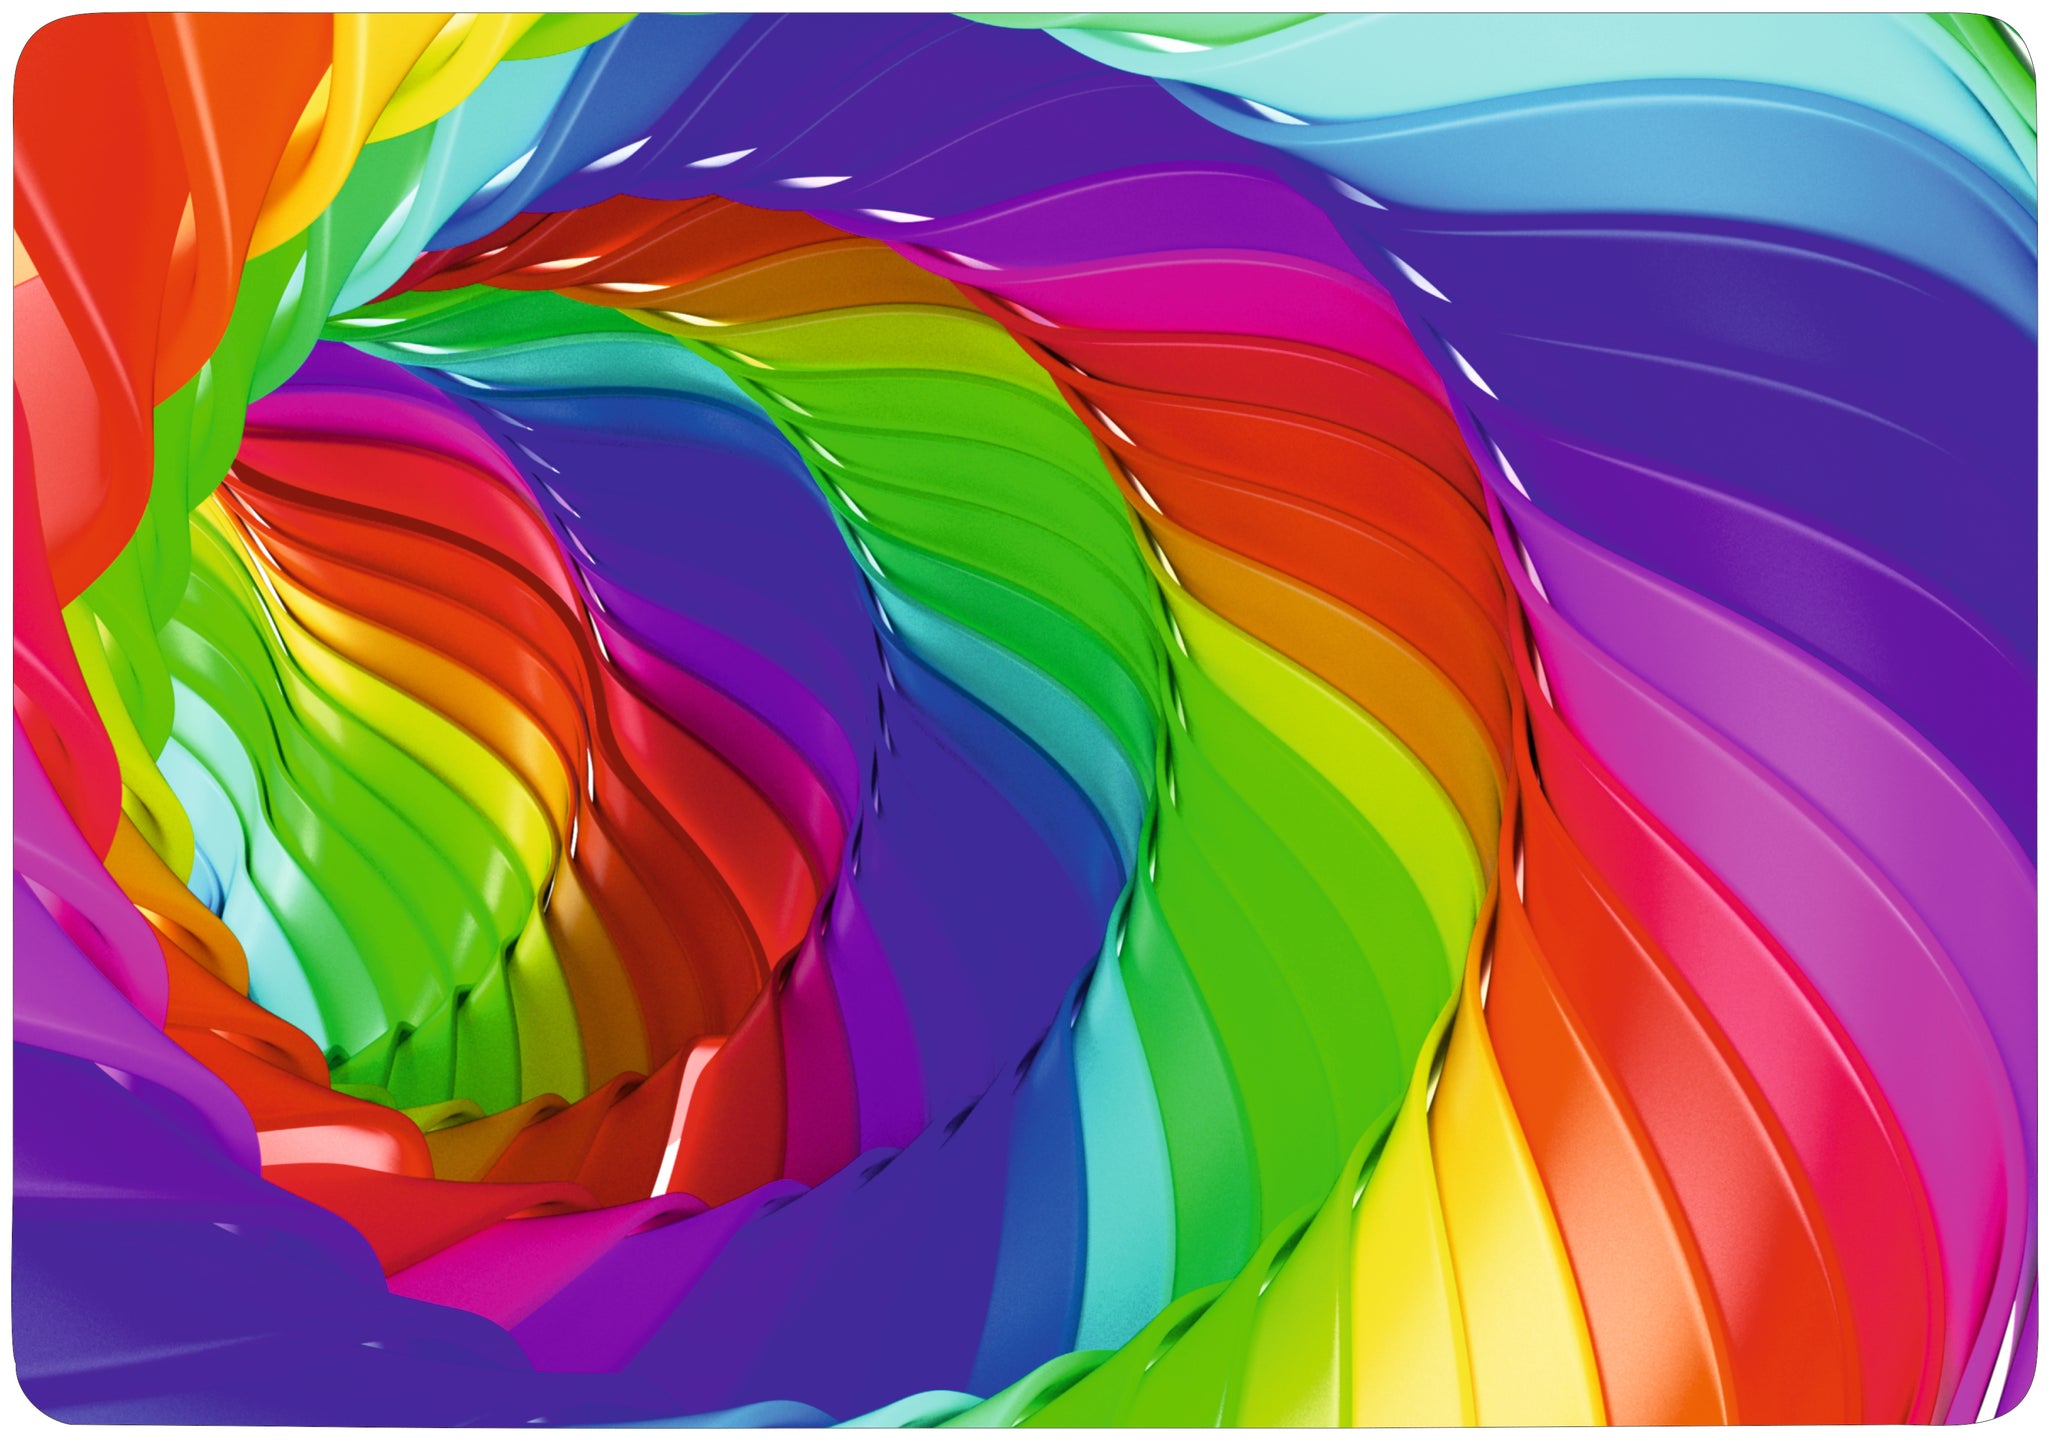 Case Cover for Macbook - 3D Geometric Rainbow Design